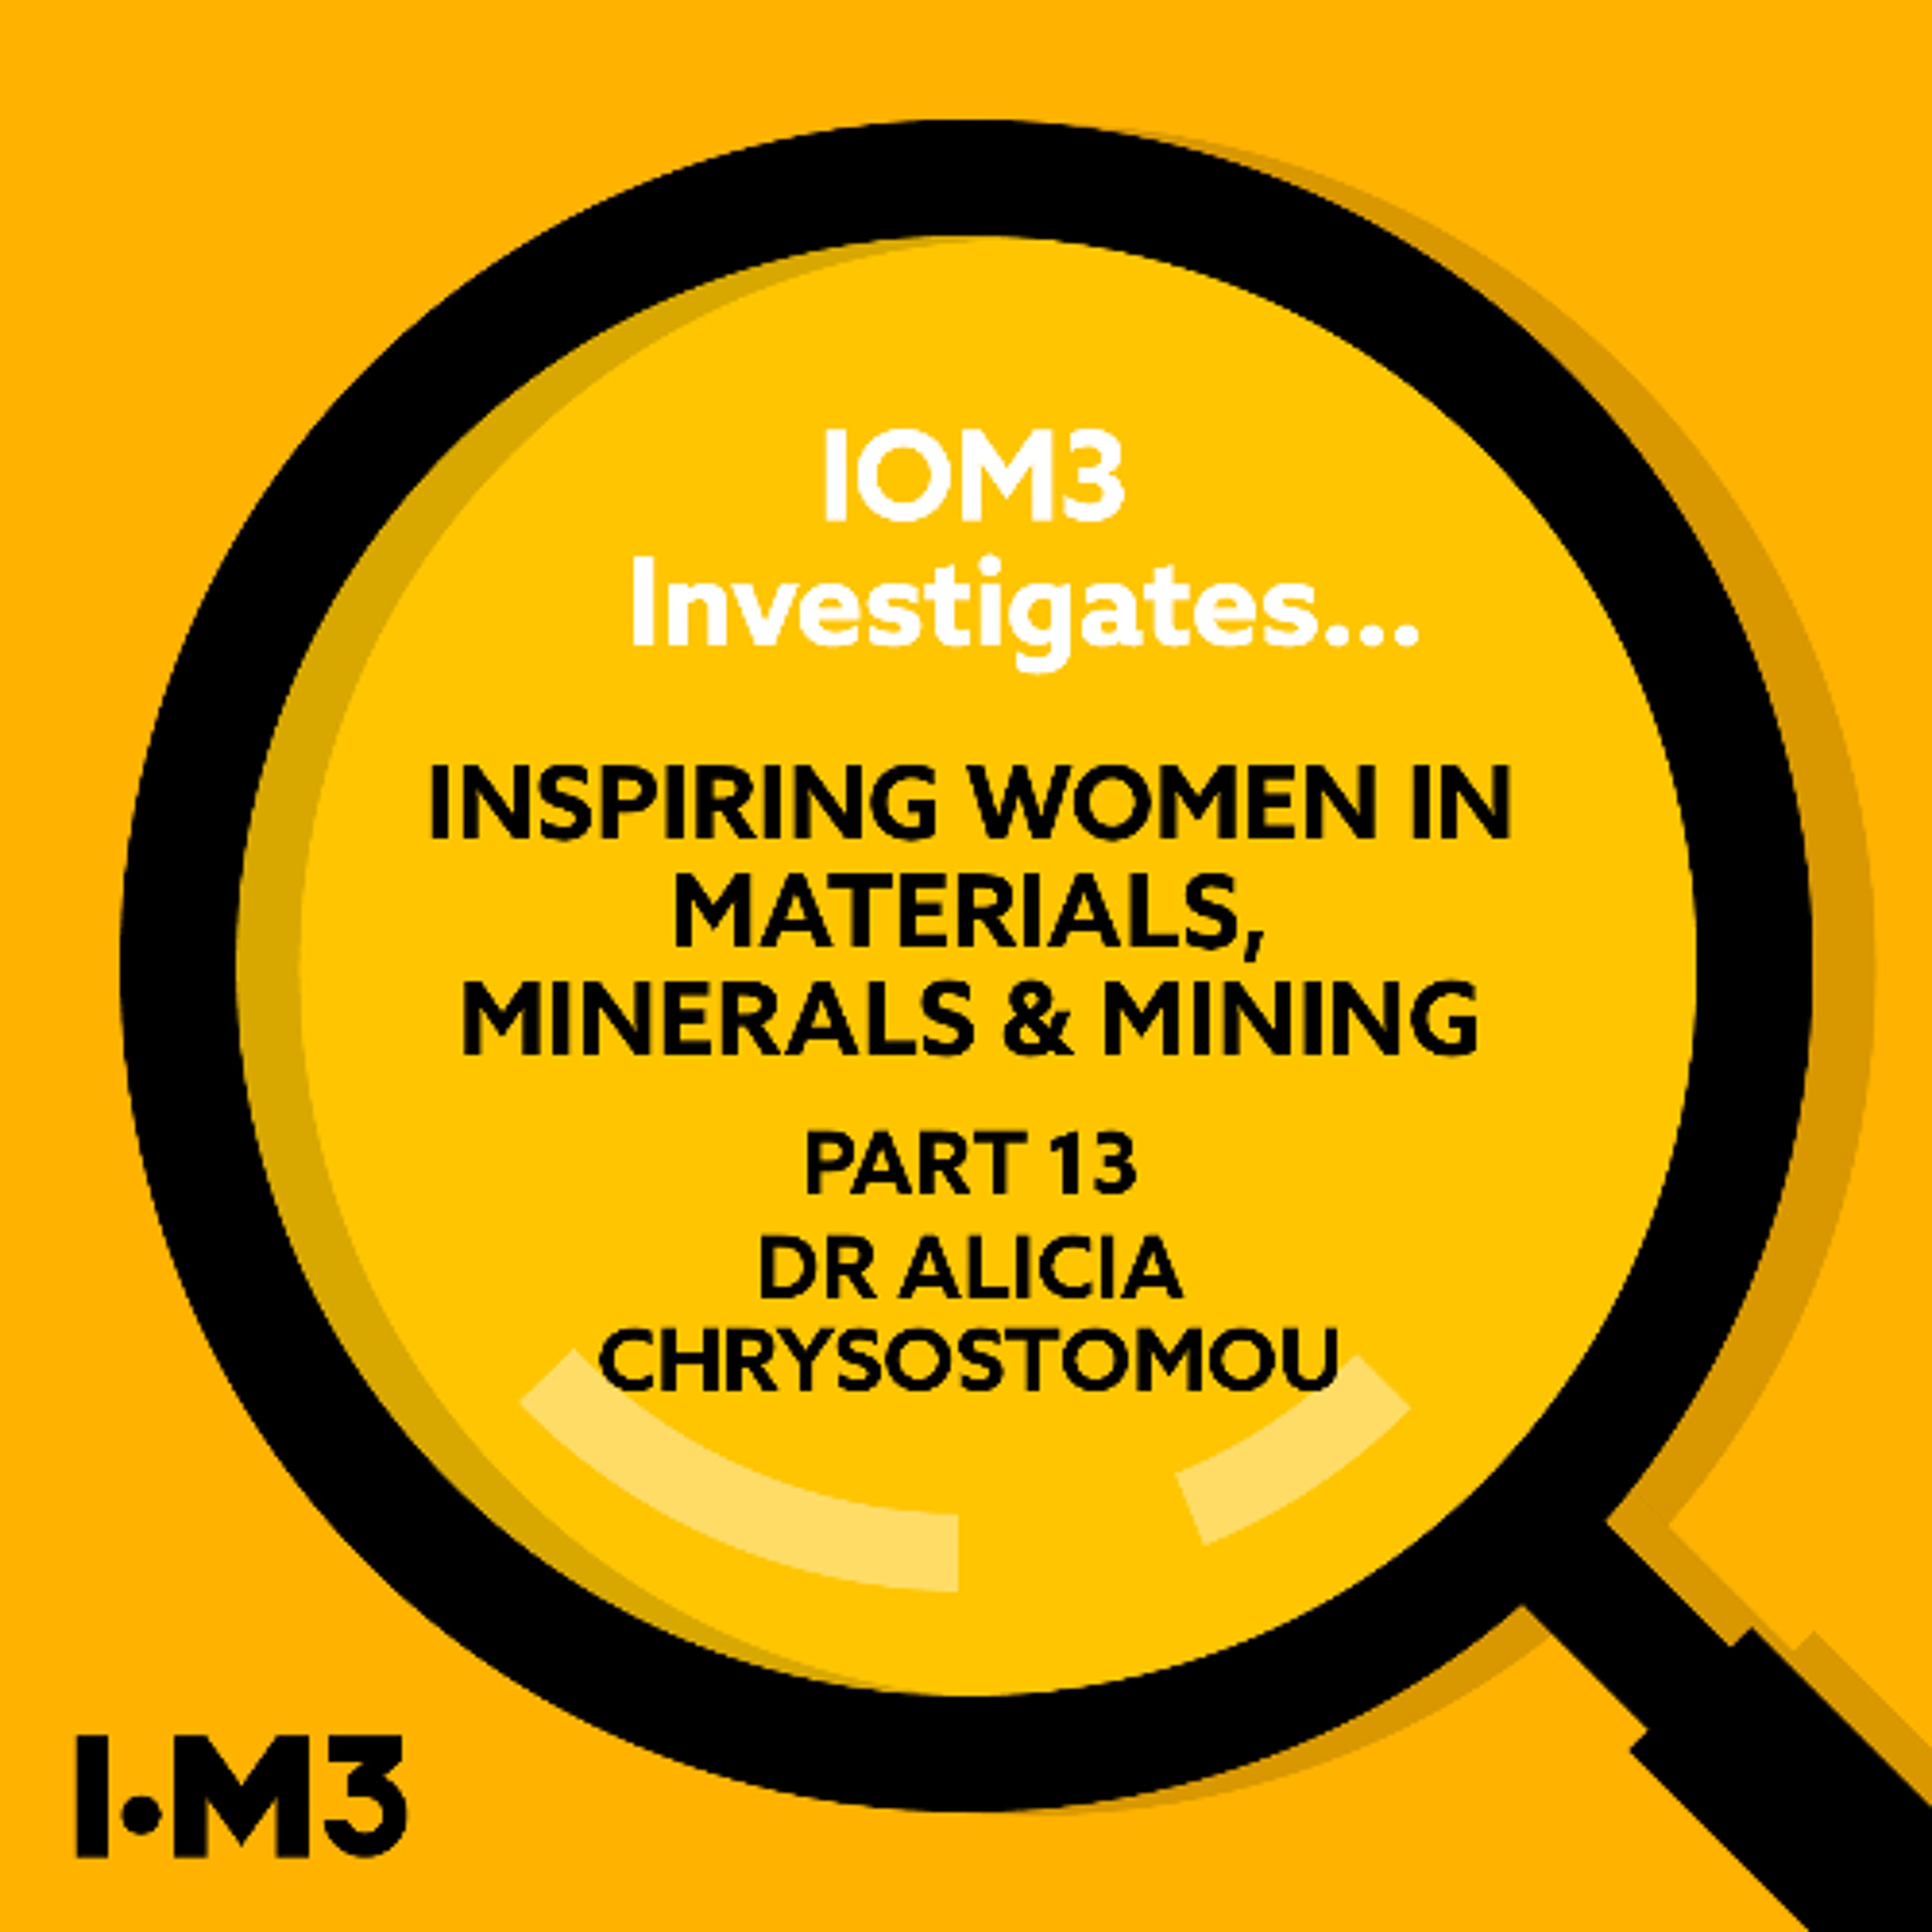 IOM3 Investigates... Inspiring women in Materials, Minerals & Mining, Dr Alicia Chrysostomou